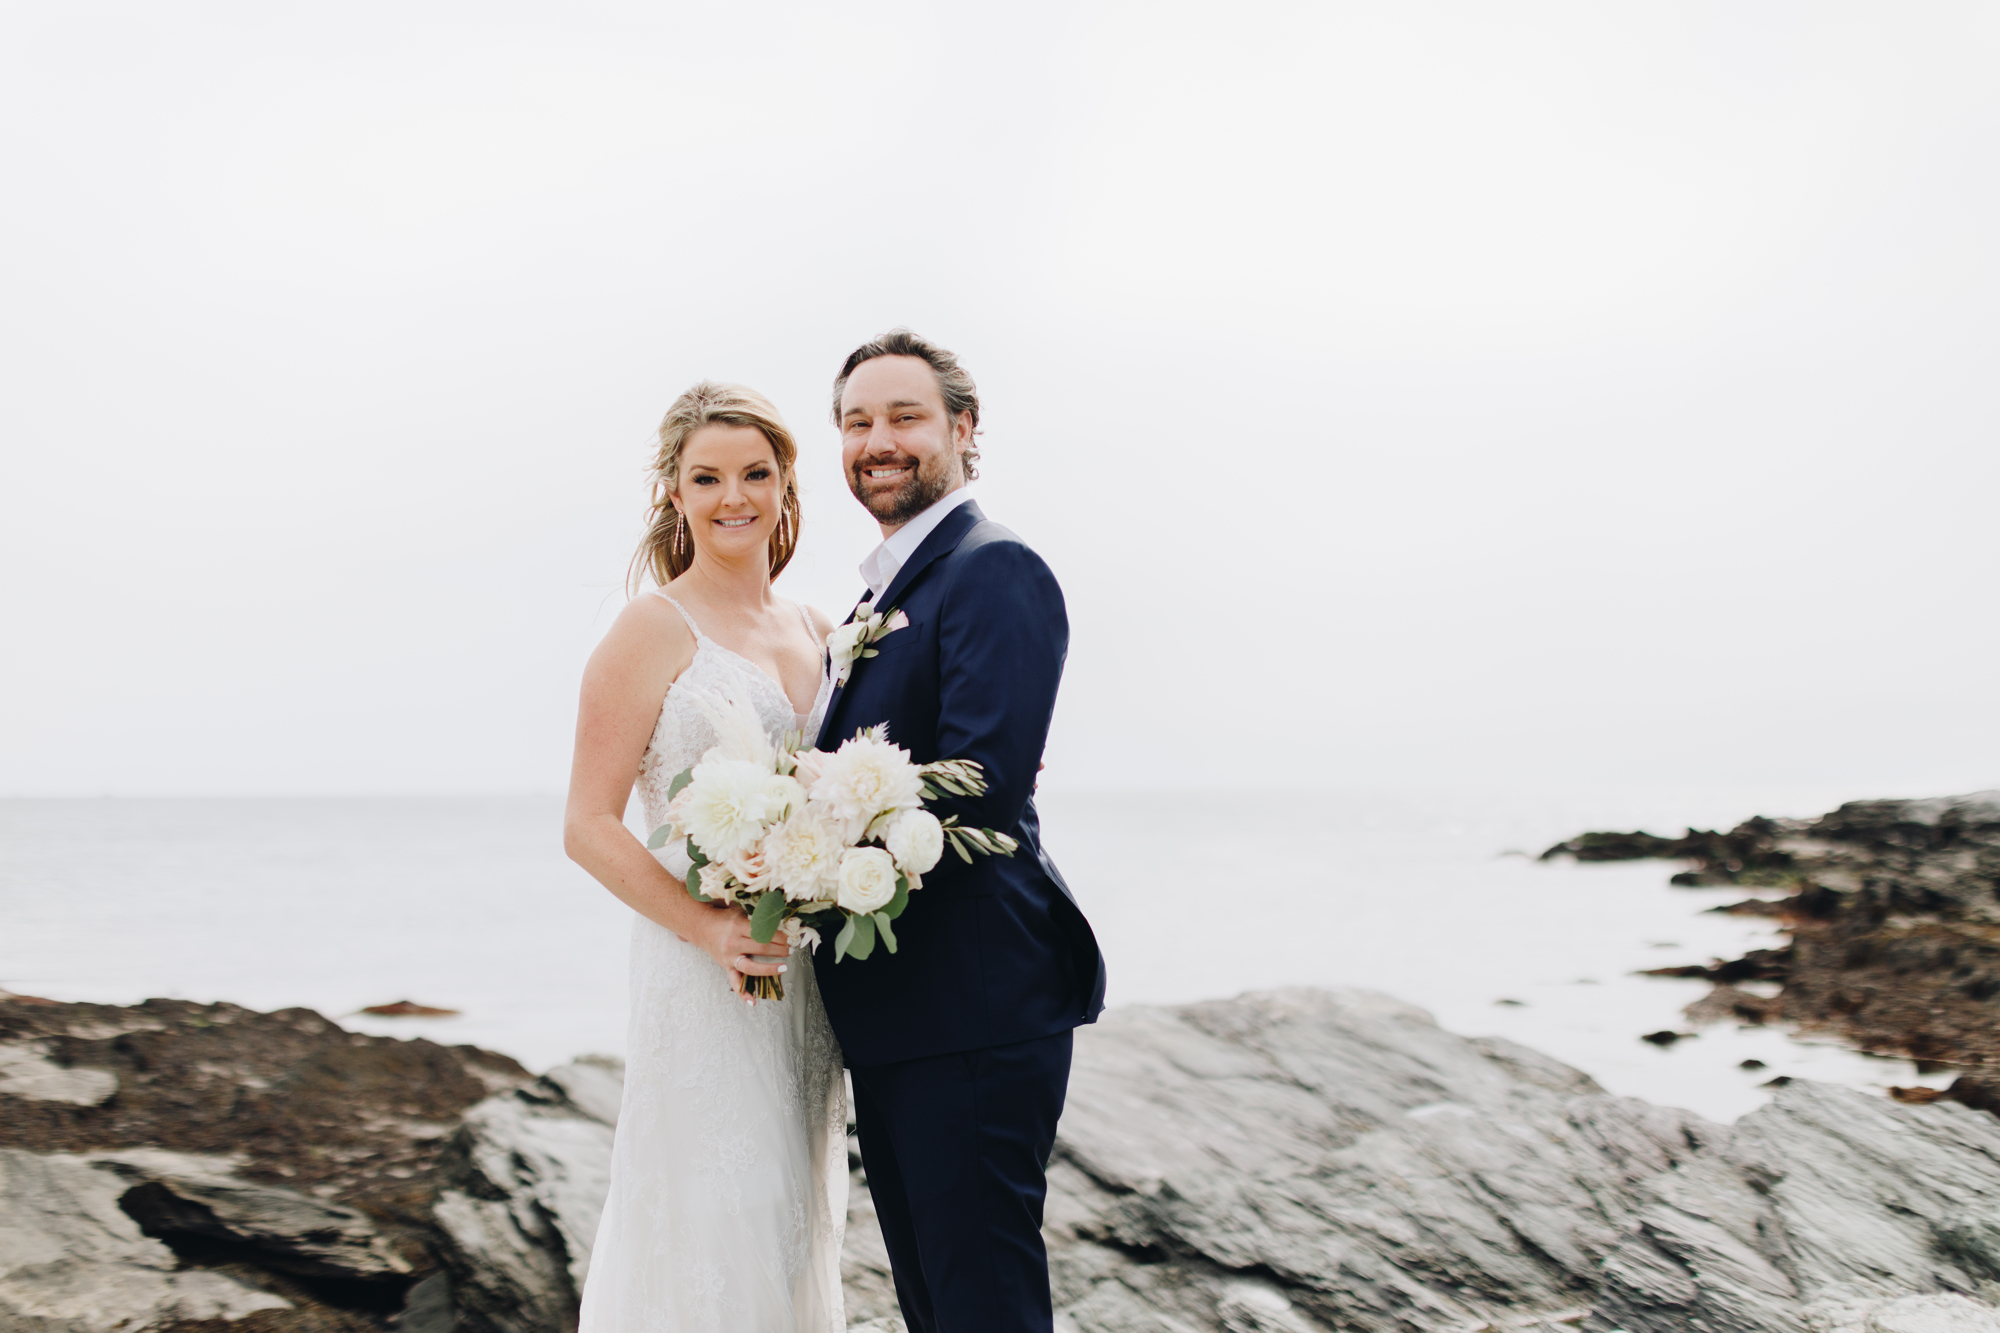 Newport wedding photos at stunning beach venue